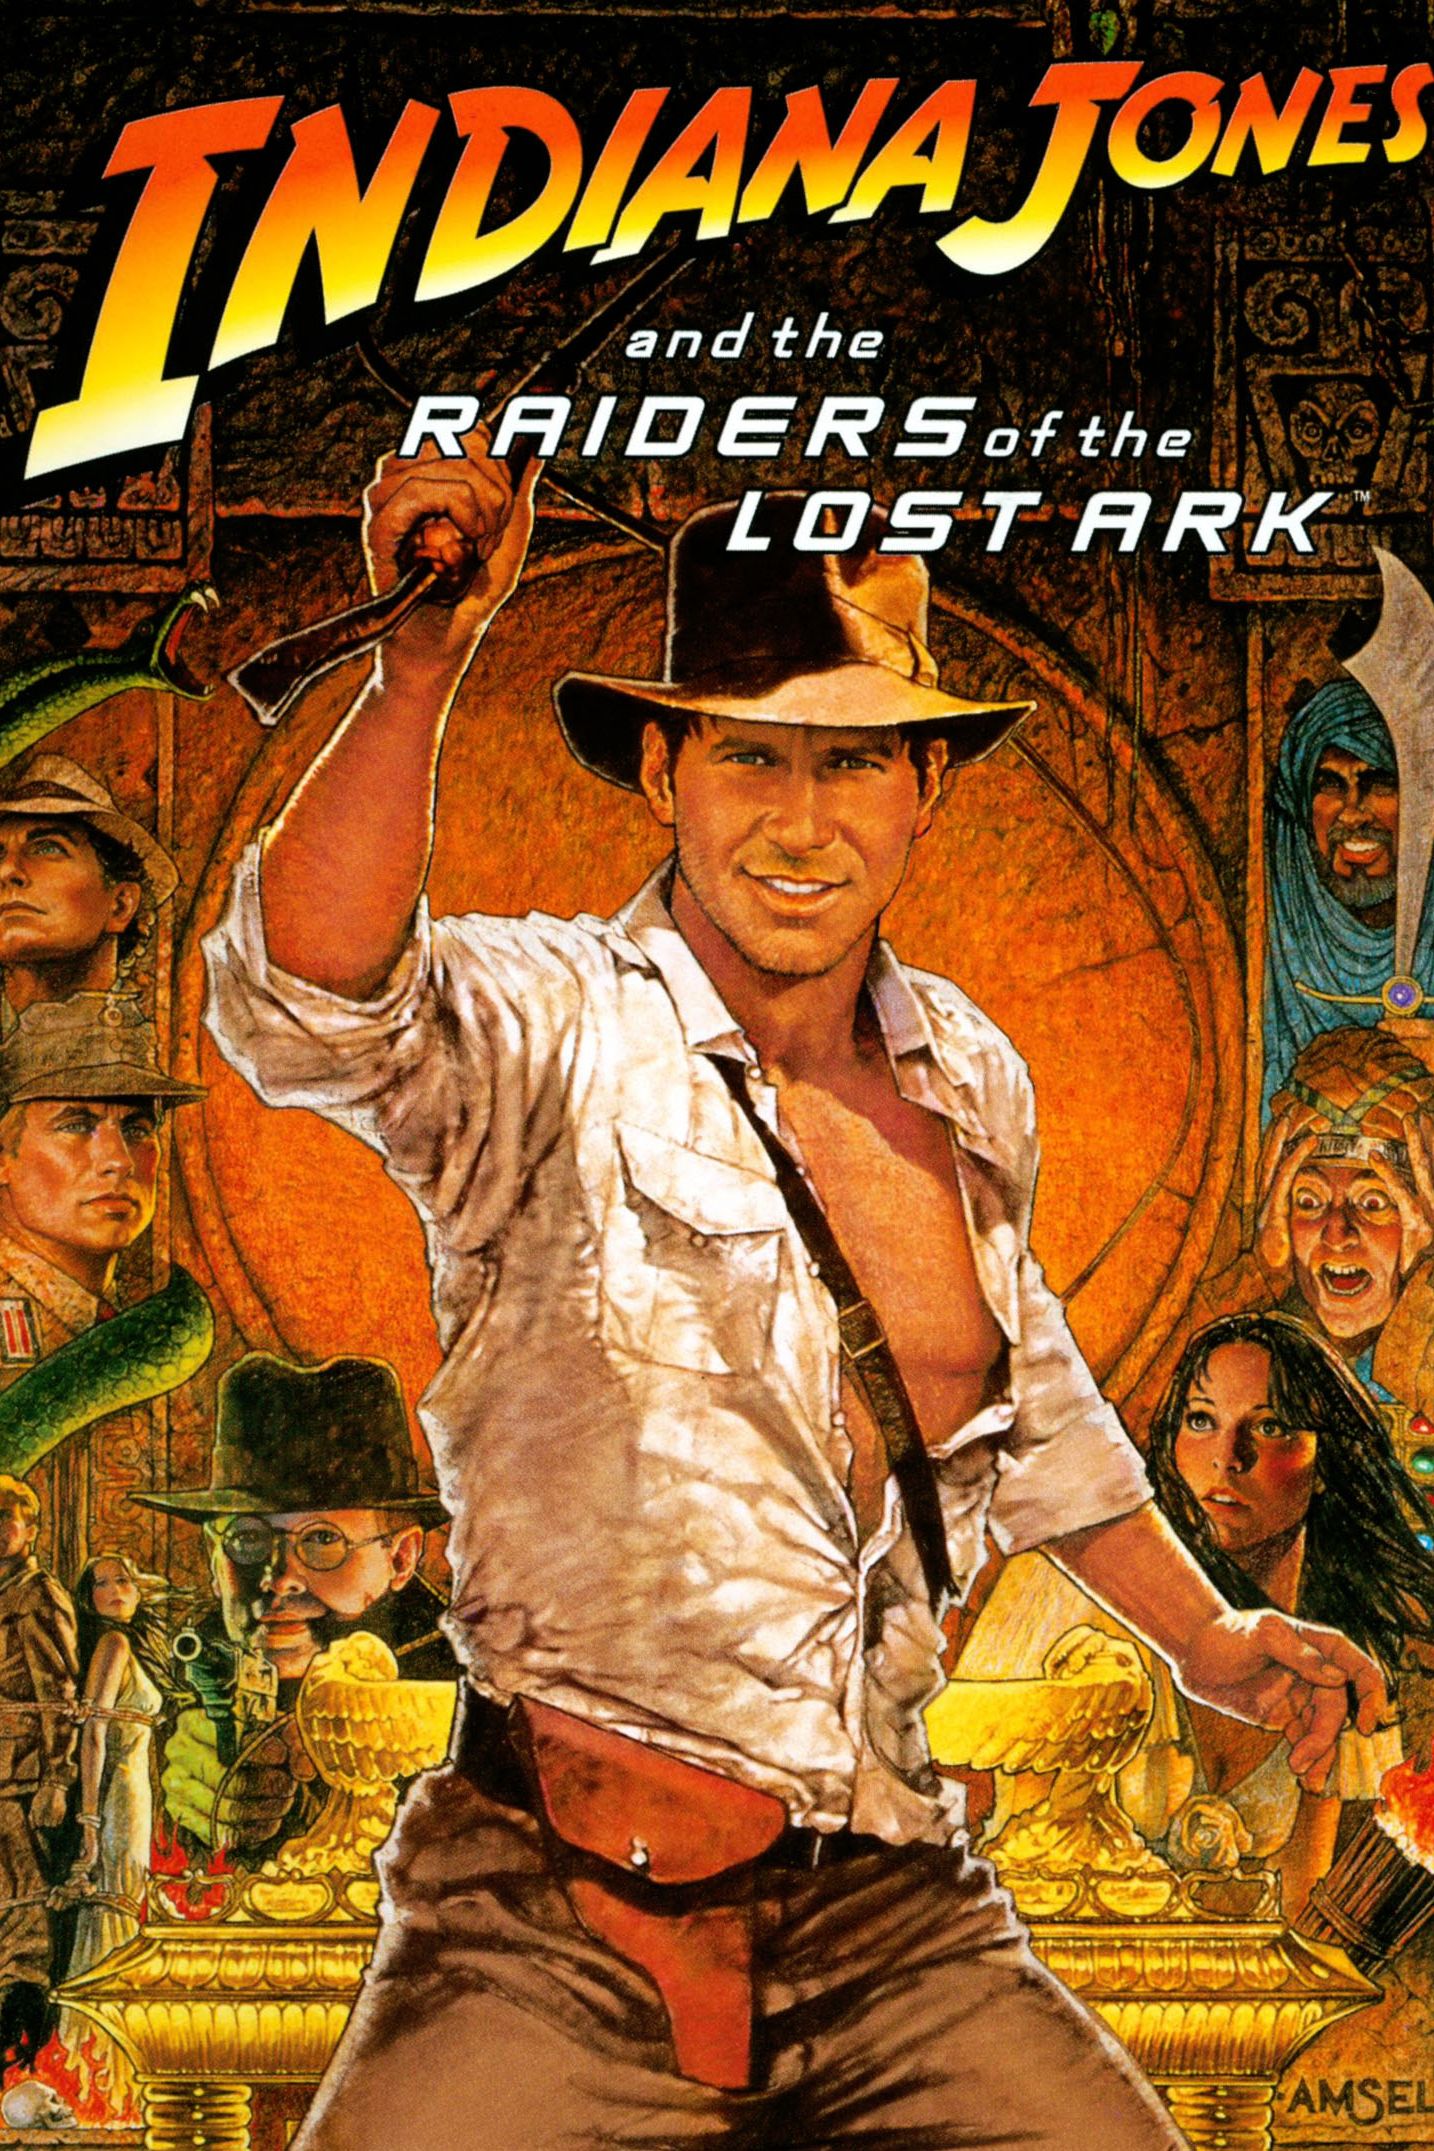 Indiana Jones Raiders of the Lost Ark Movie Poster